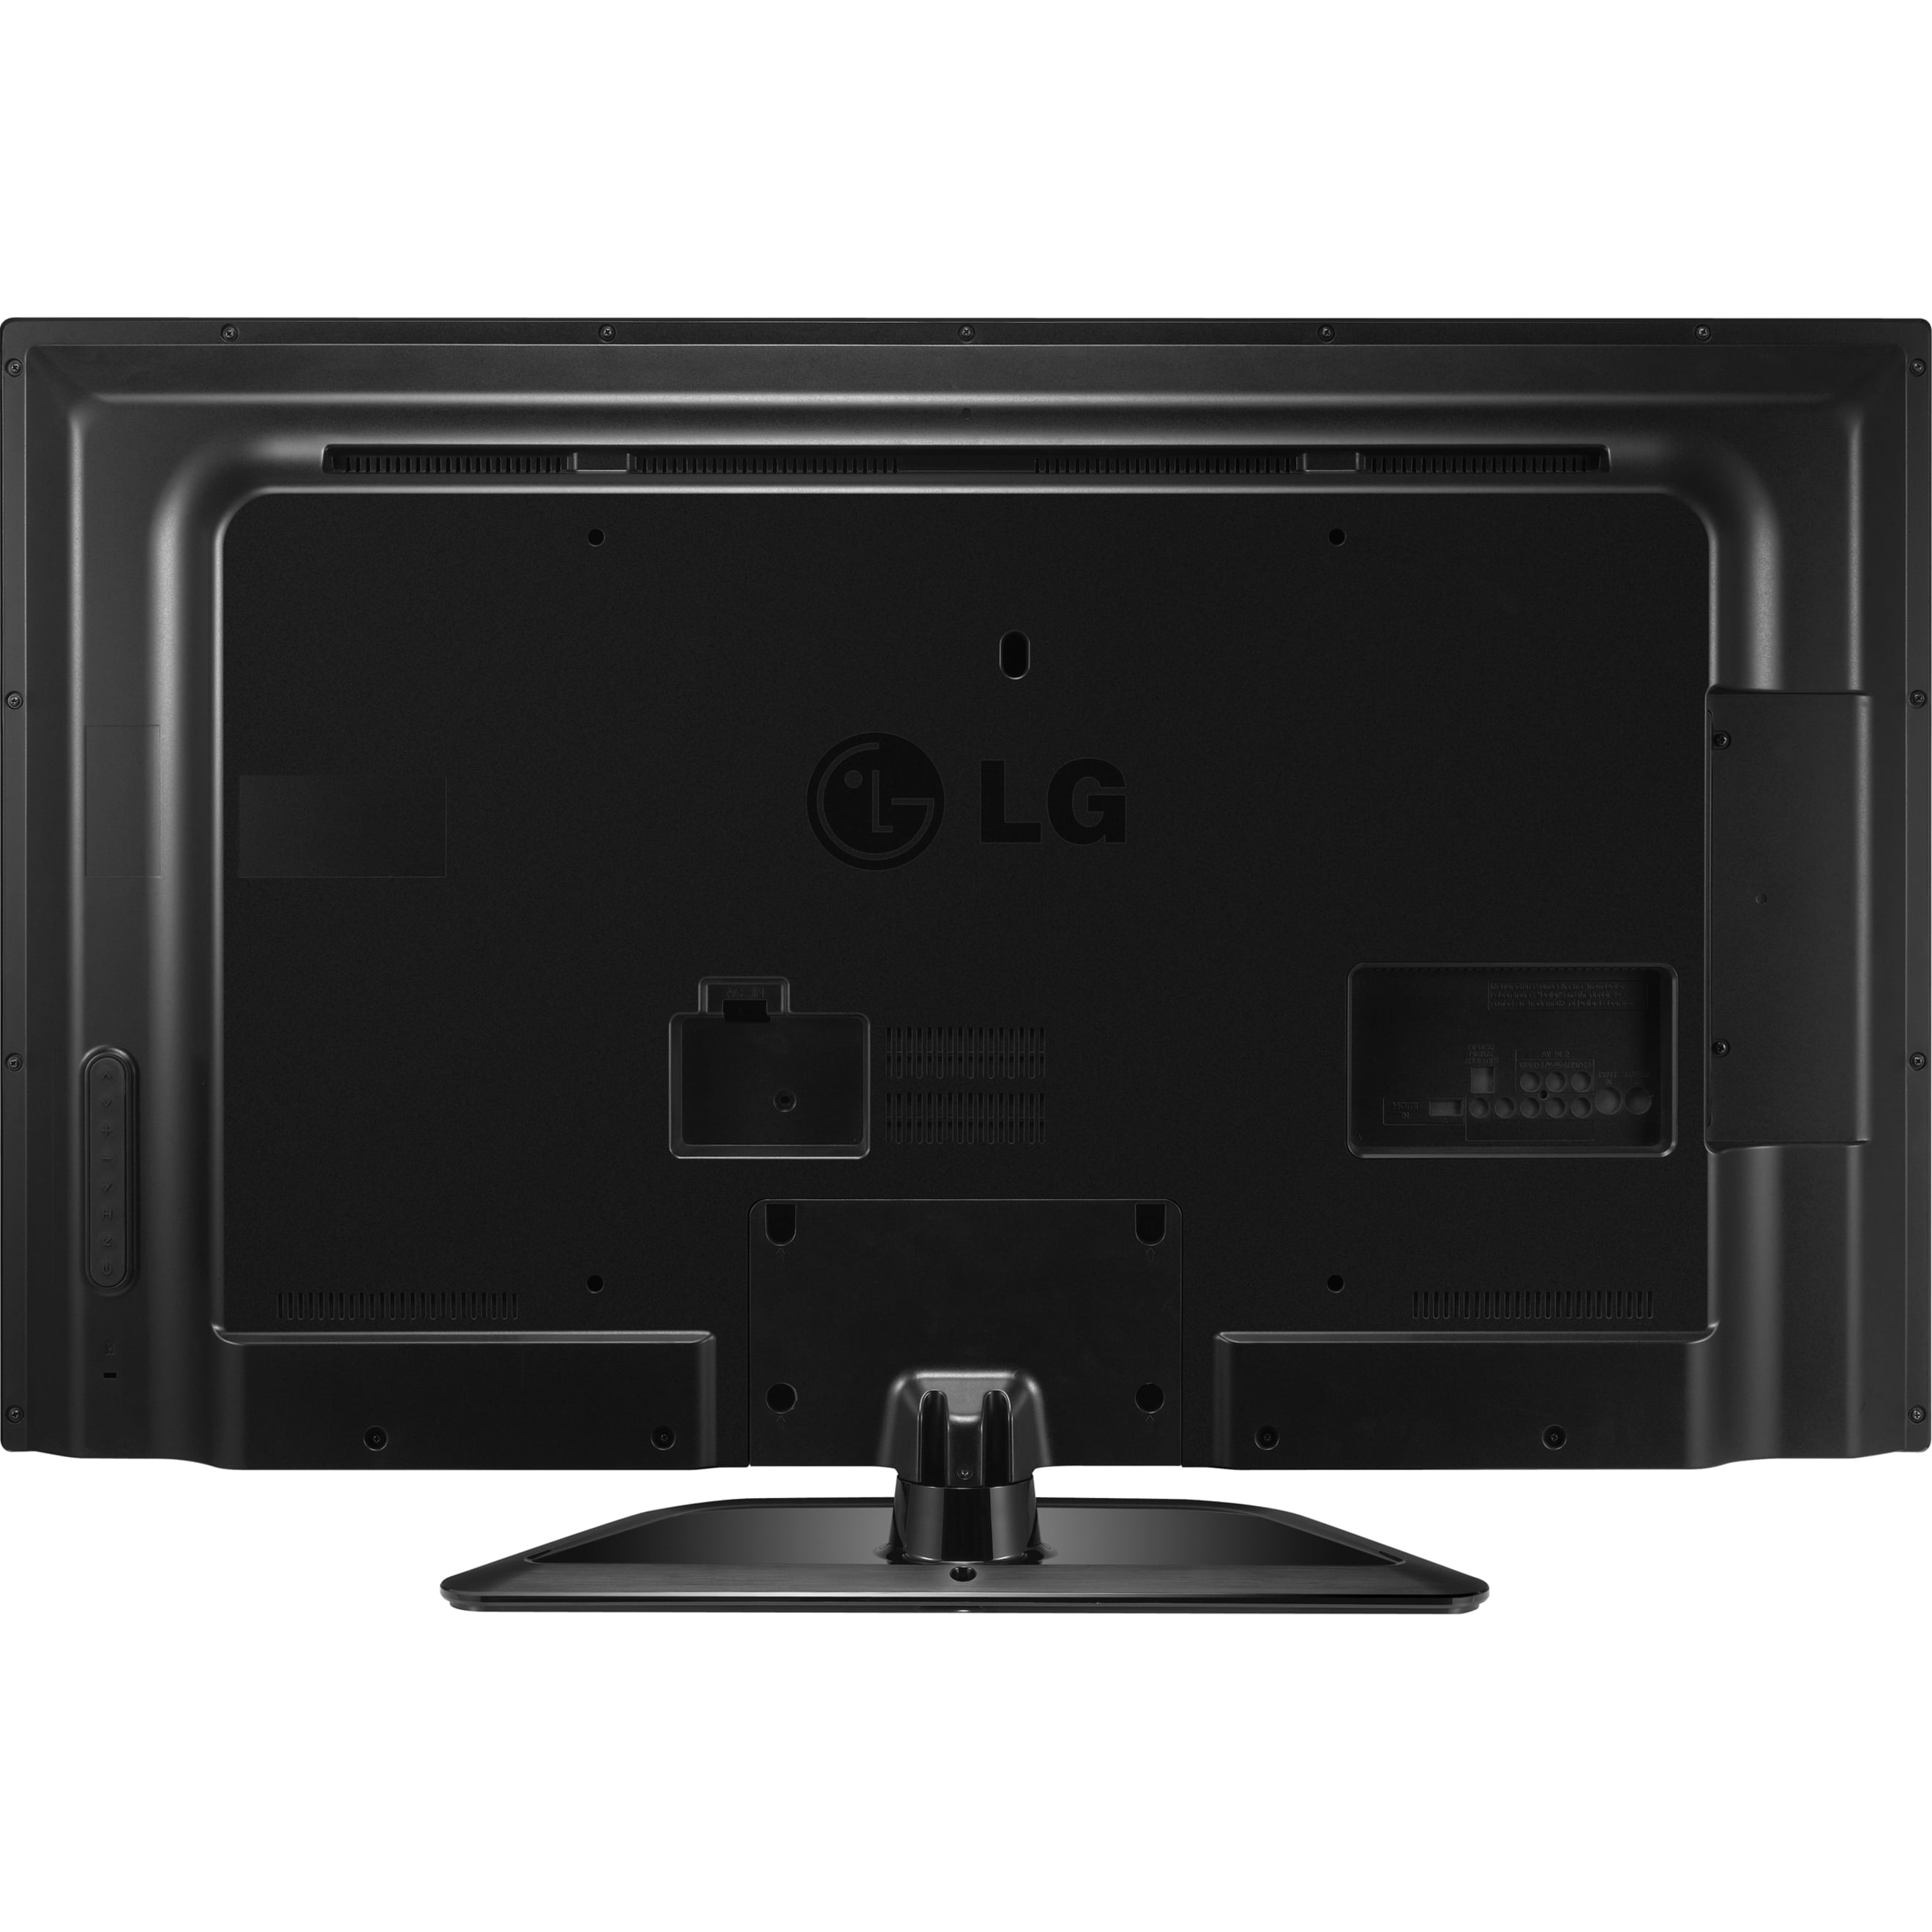 50" Class HDTV (1080p) LED-LCD TV (50LN5700) - Walmart.com